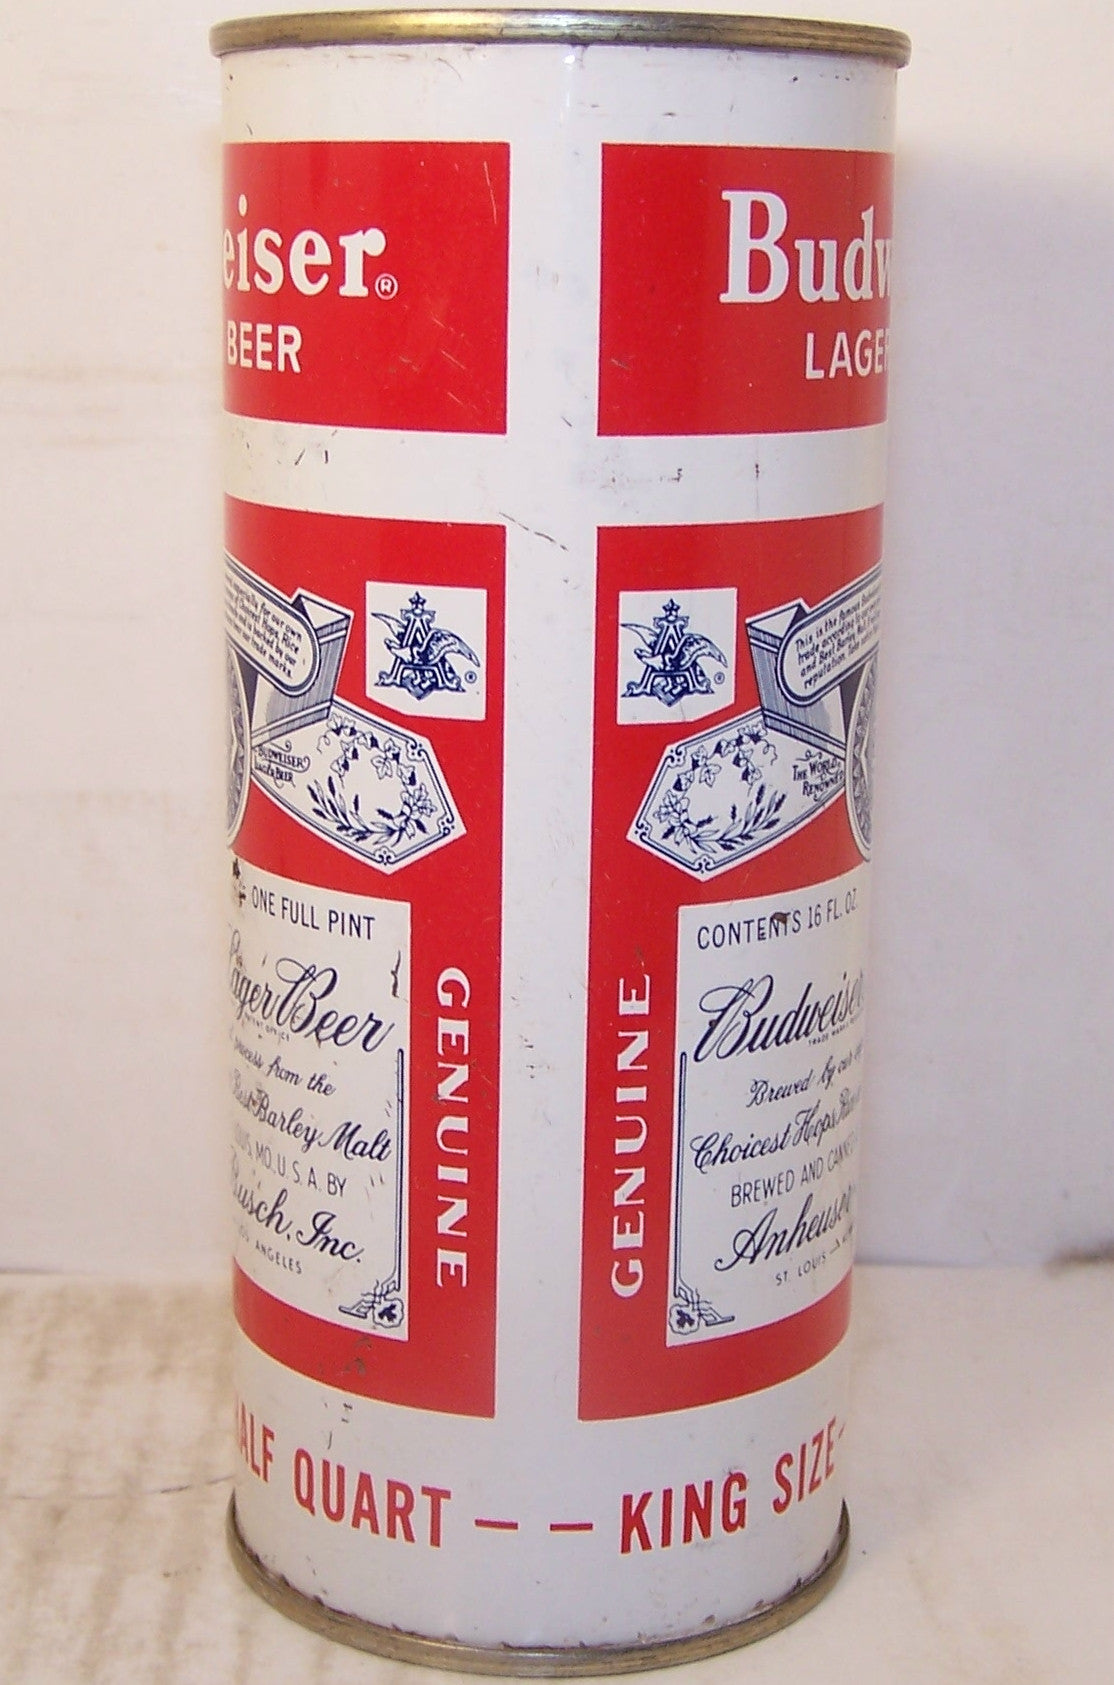 Budweiser Lager Beer, USBC 226-24, Grade 1- Sold on 05/02/17